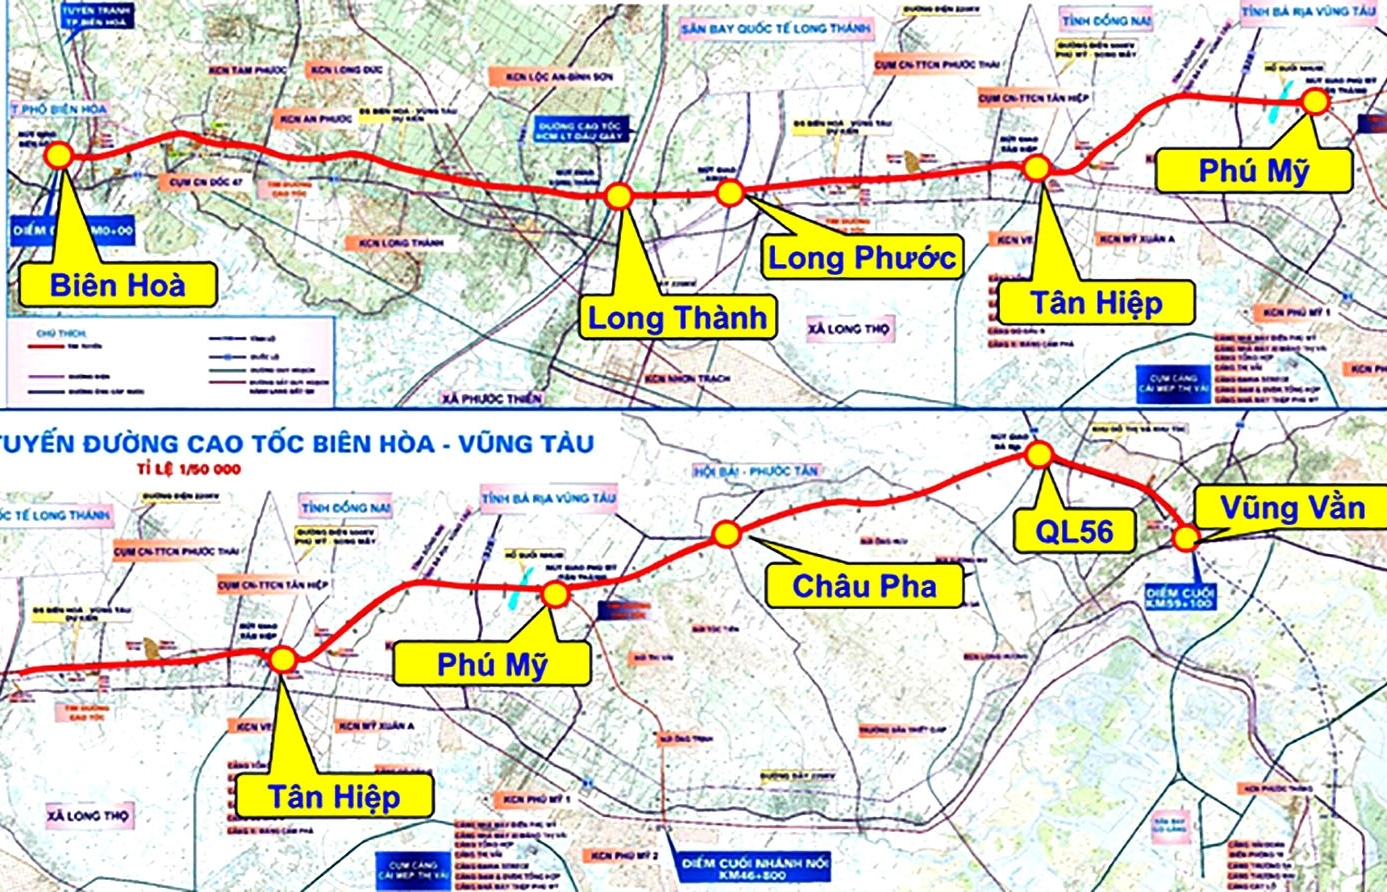 Bien Hoa-Vung Tau Expressway to be developed under PPP format